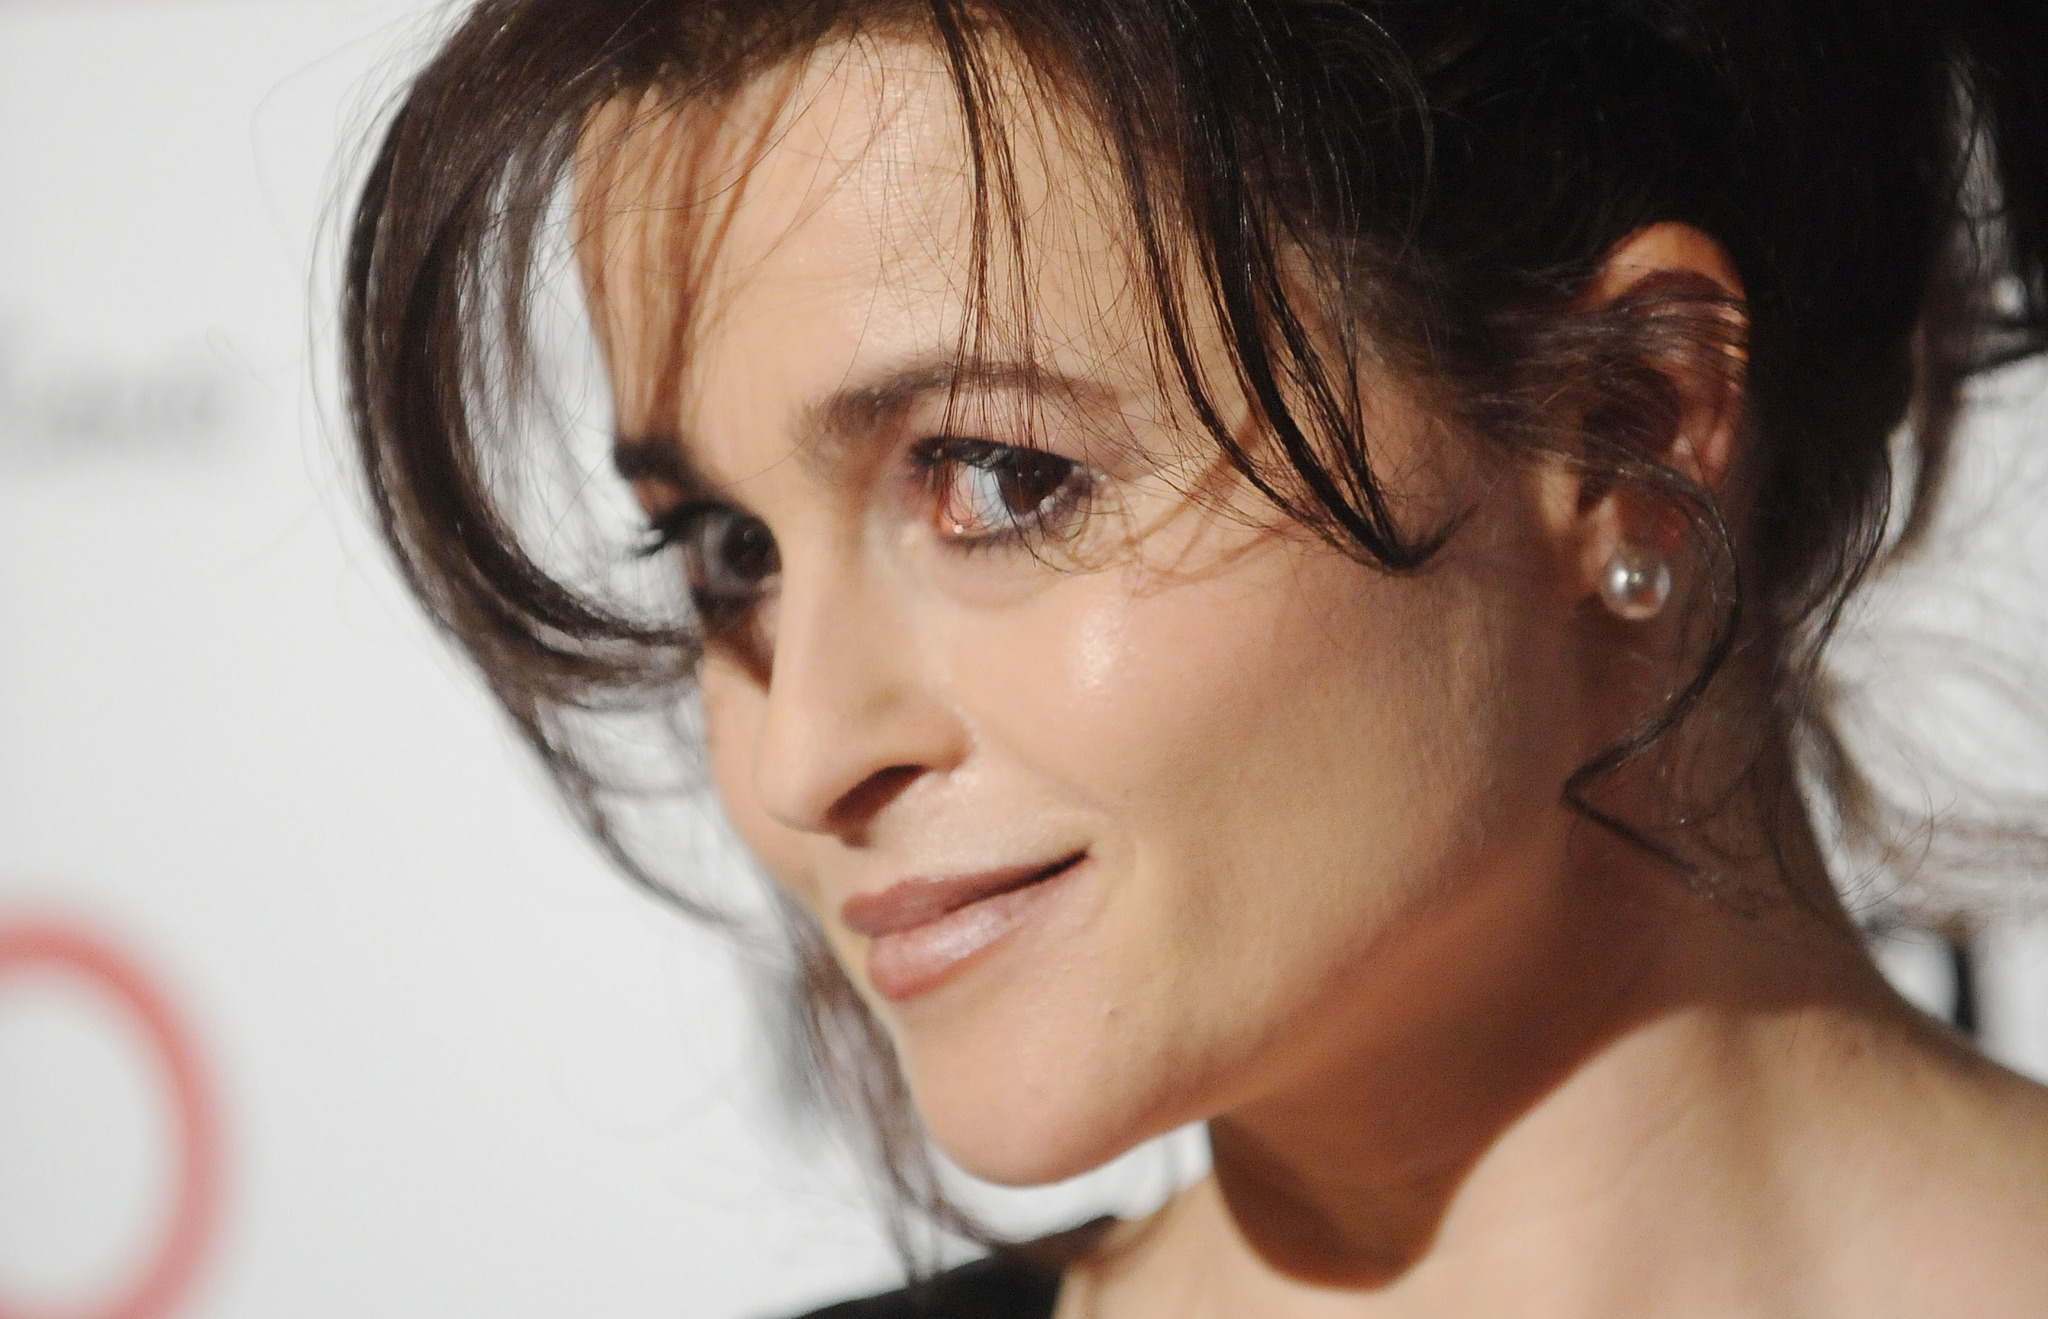 Helena Bonham-Carter attends the London Critics' Circle Film Awards at The Mayfair Hotel on January 20, 2013 in London, England.